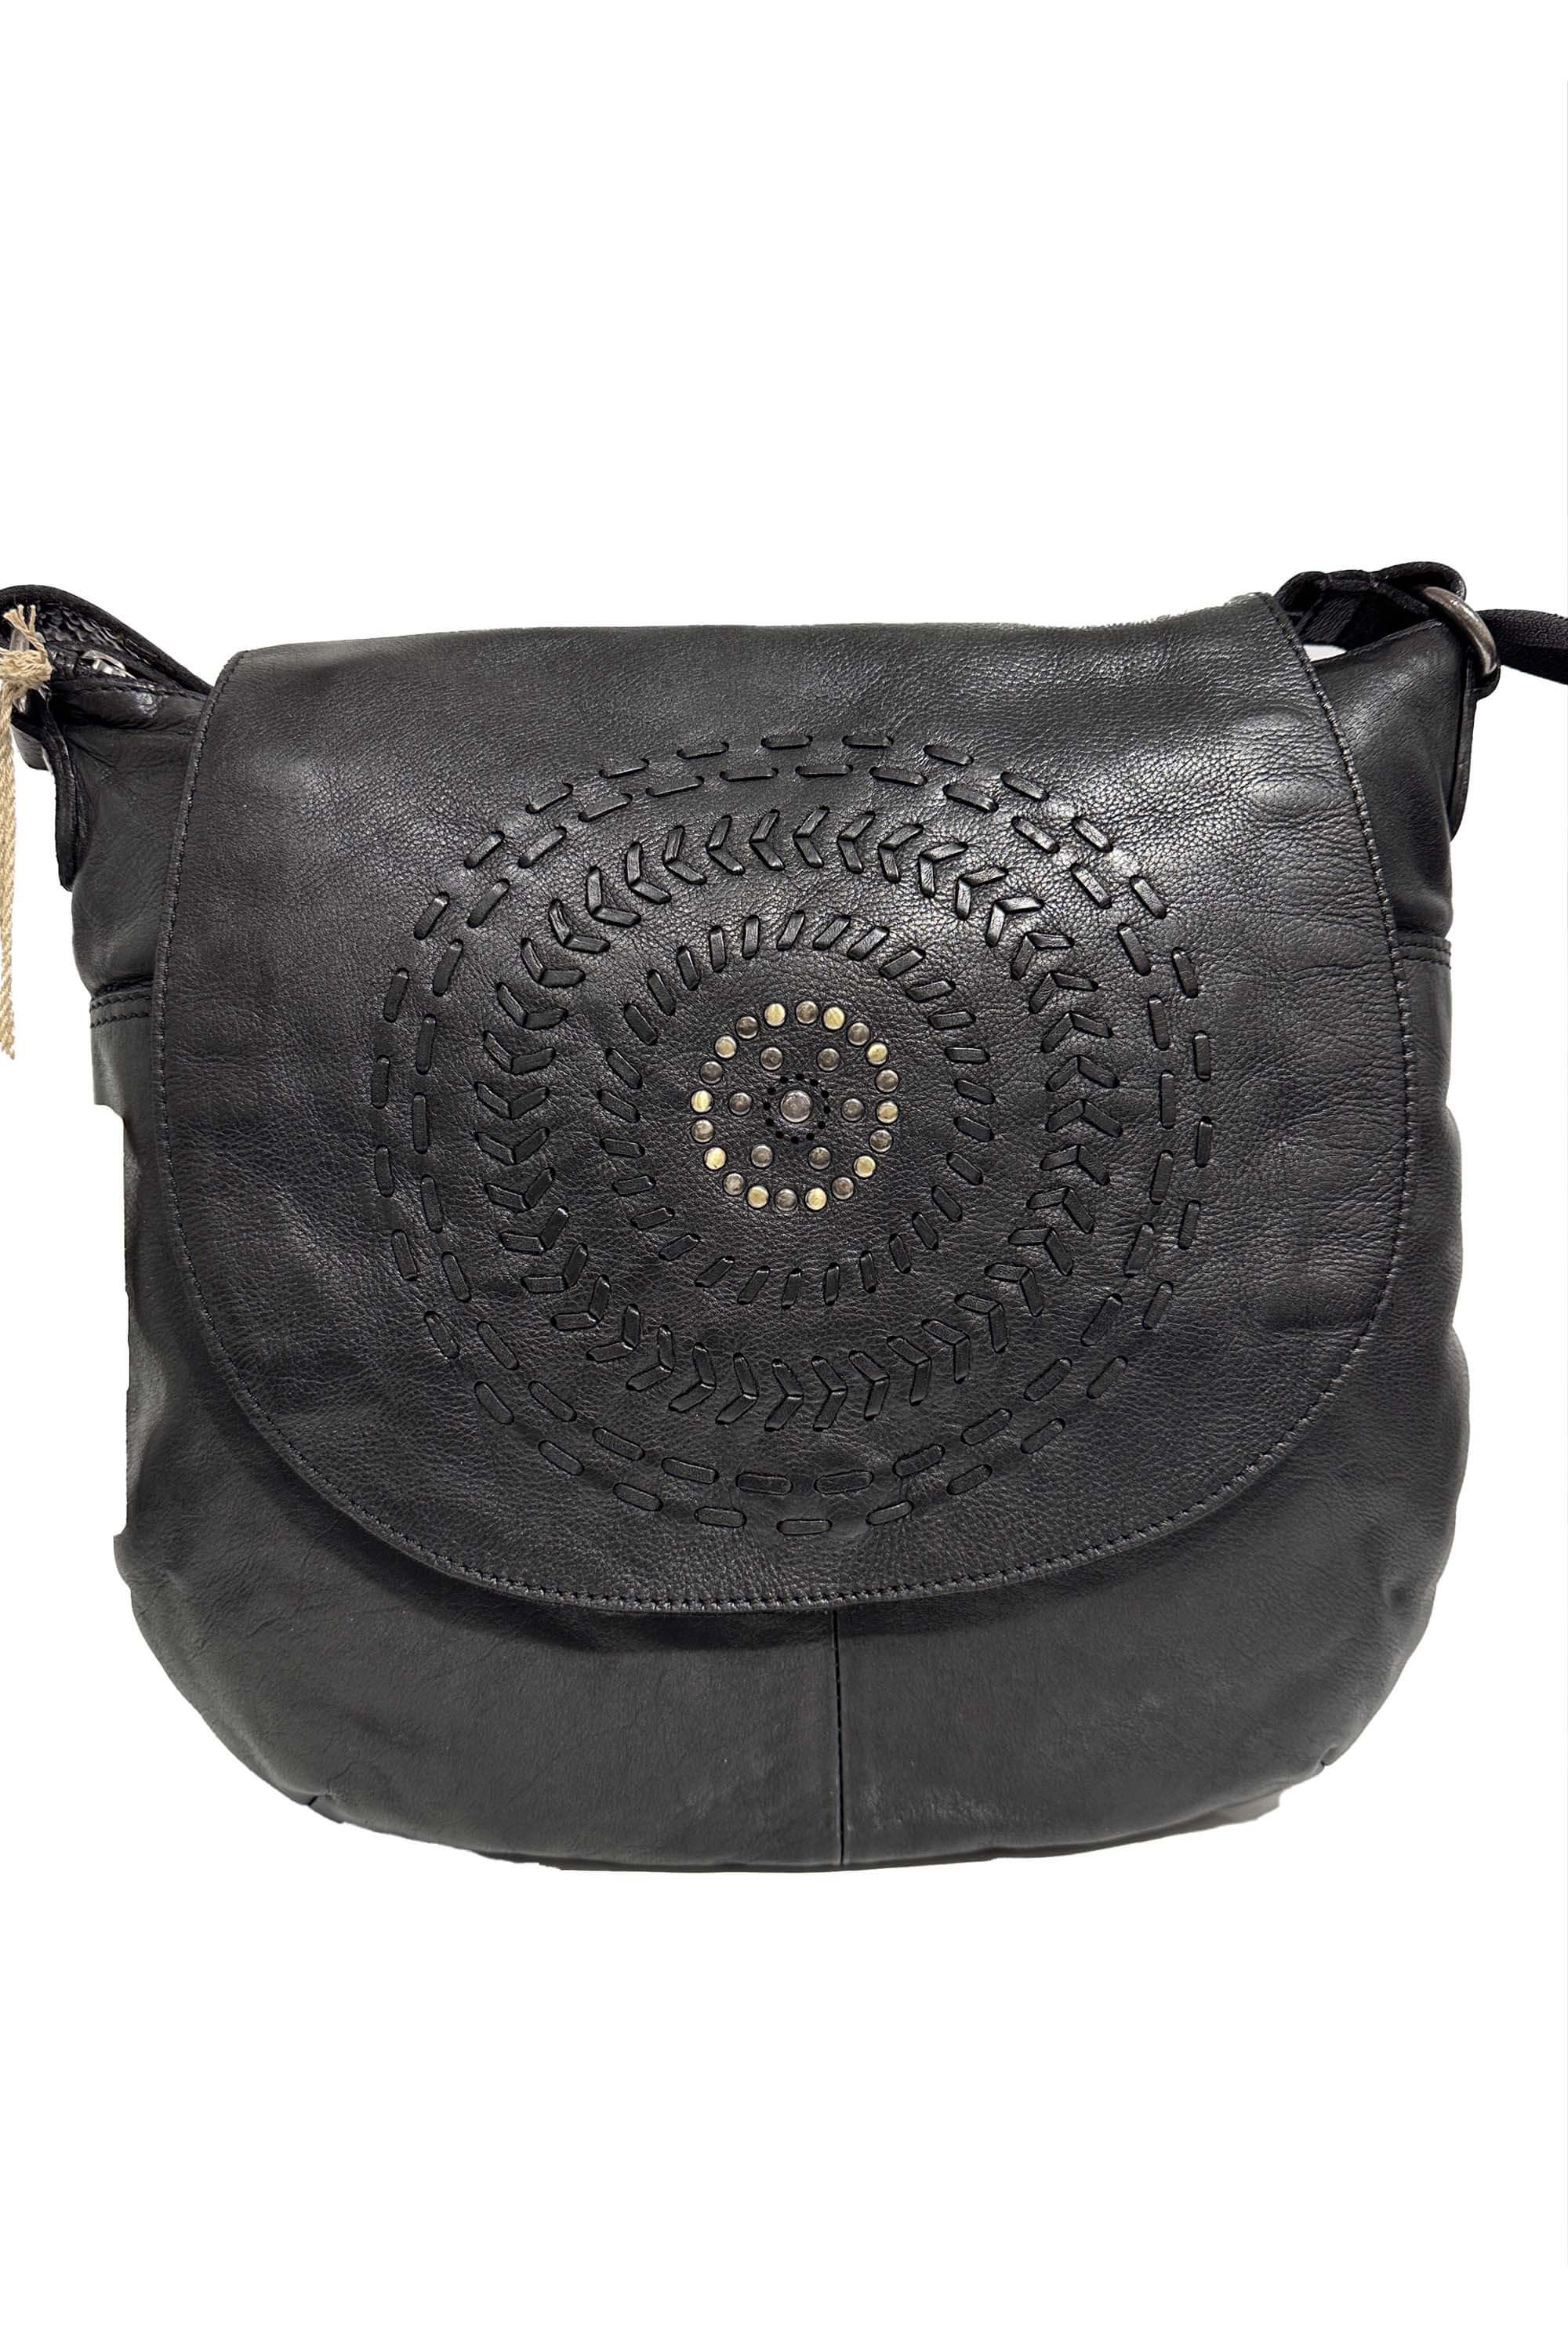 Gianni Conti Leather 6232 Black Bag